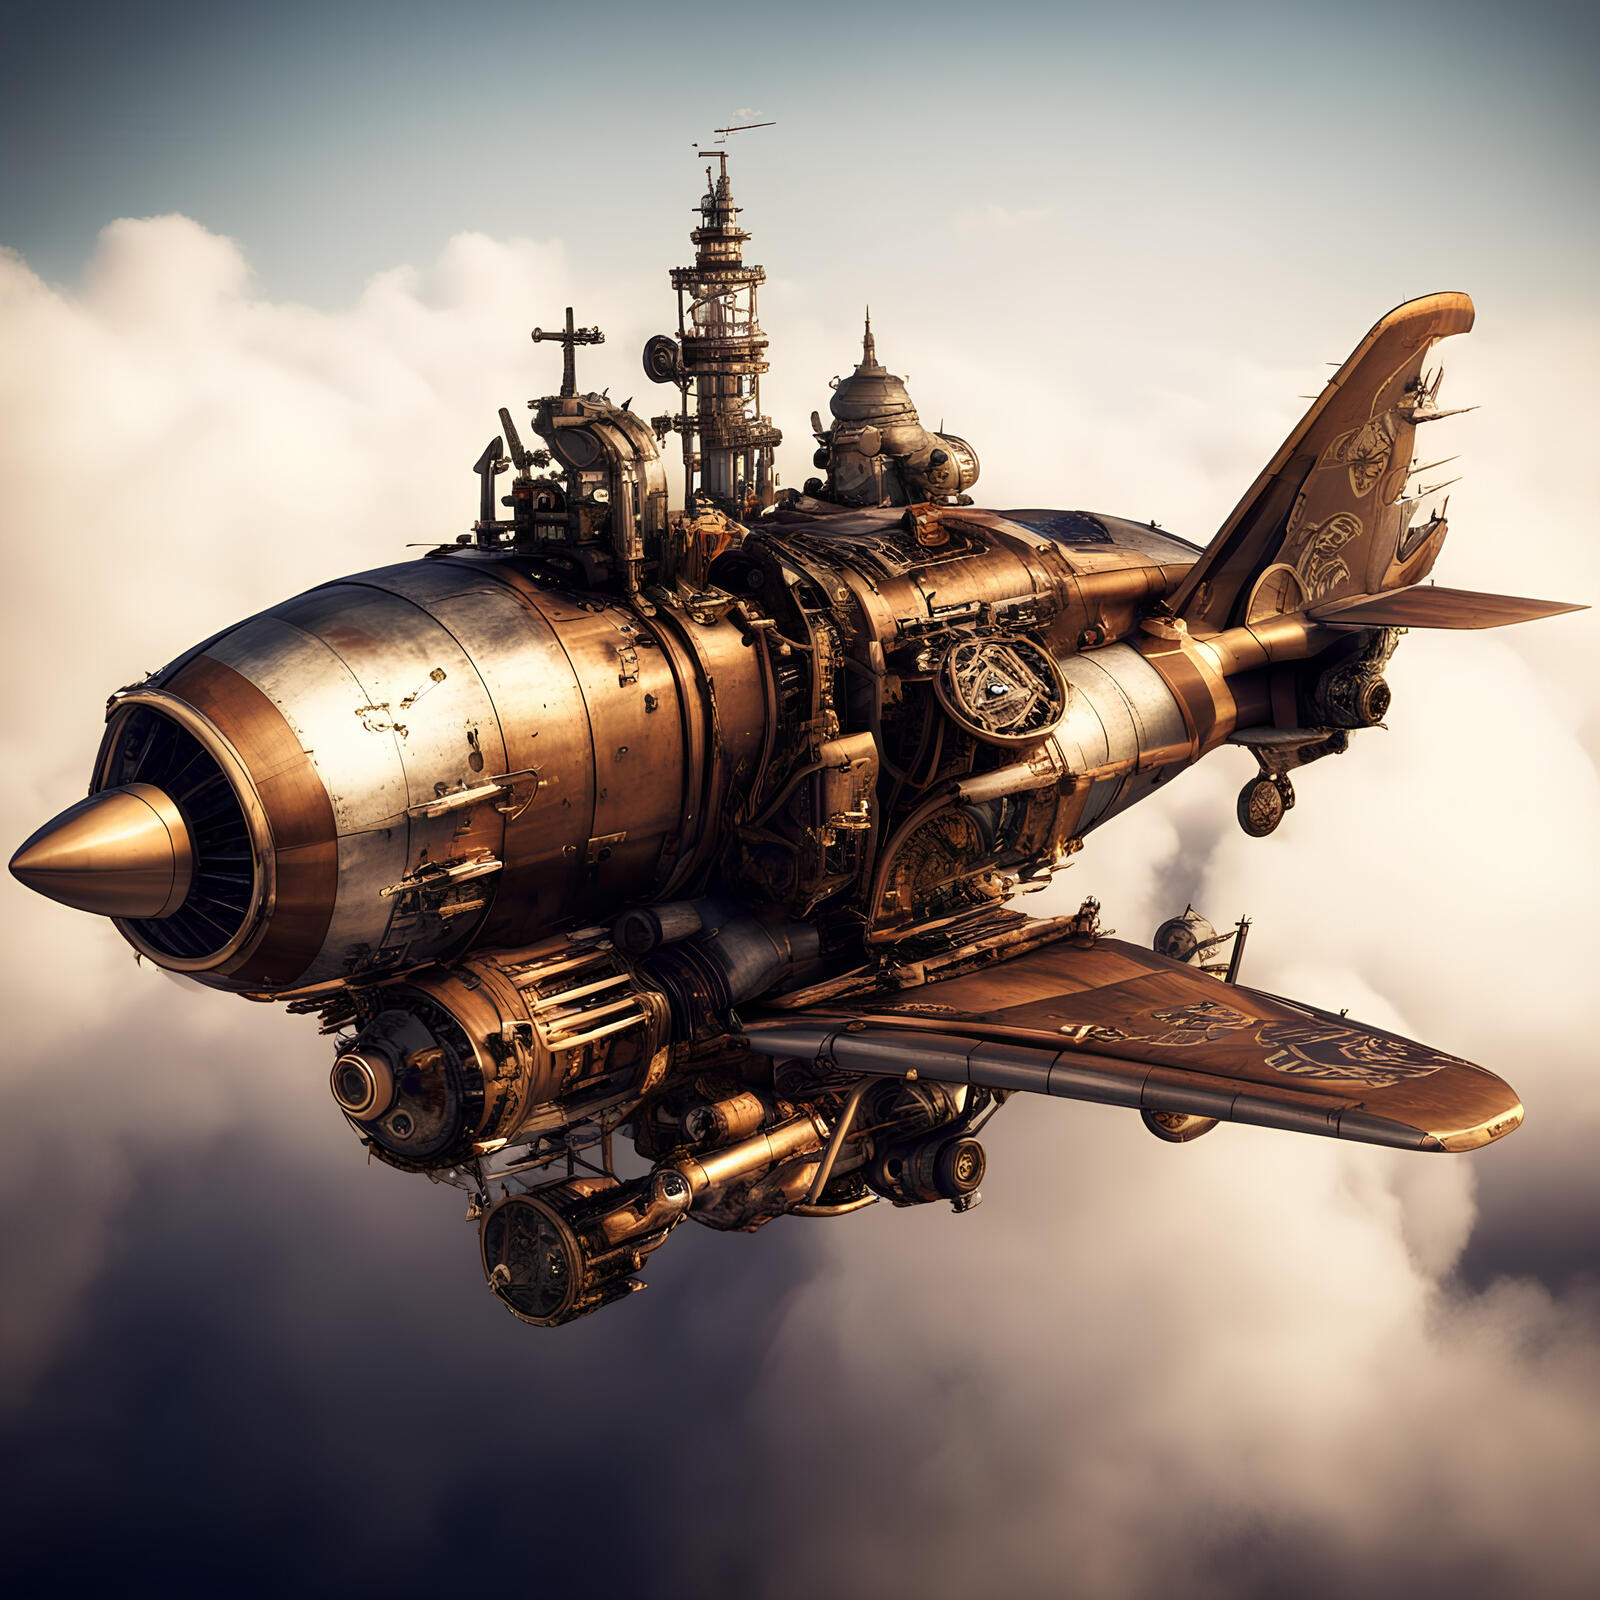 Бесплатное фото Steampunk fighter jet